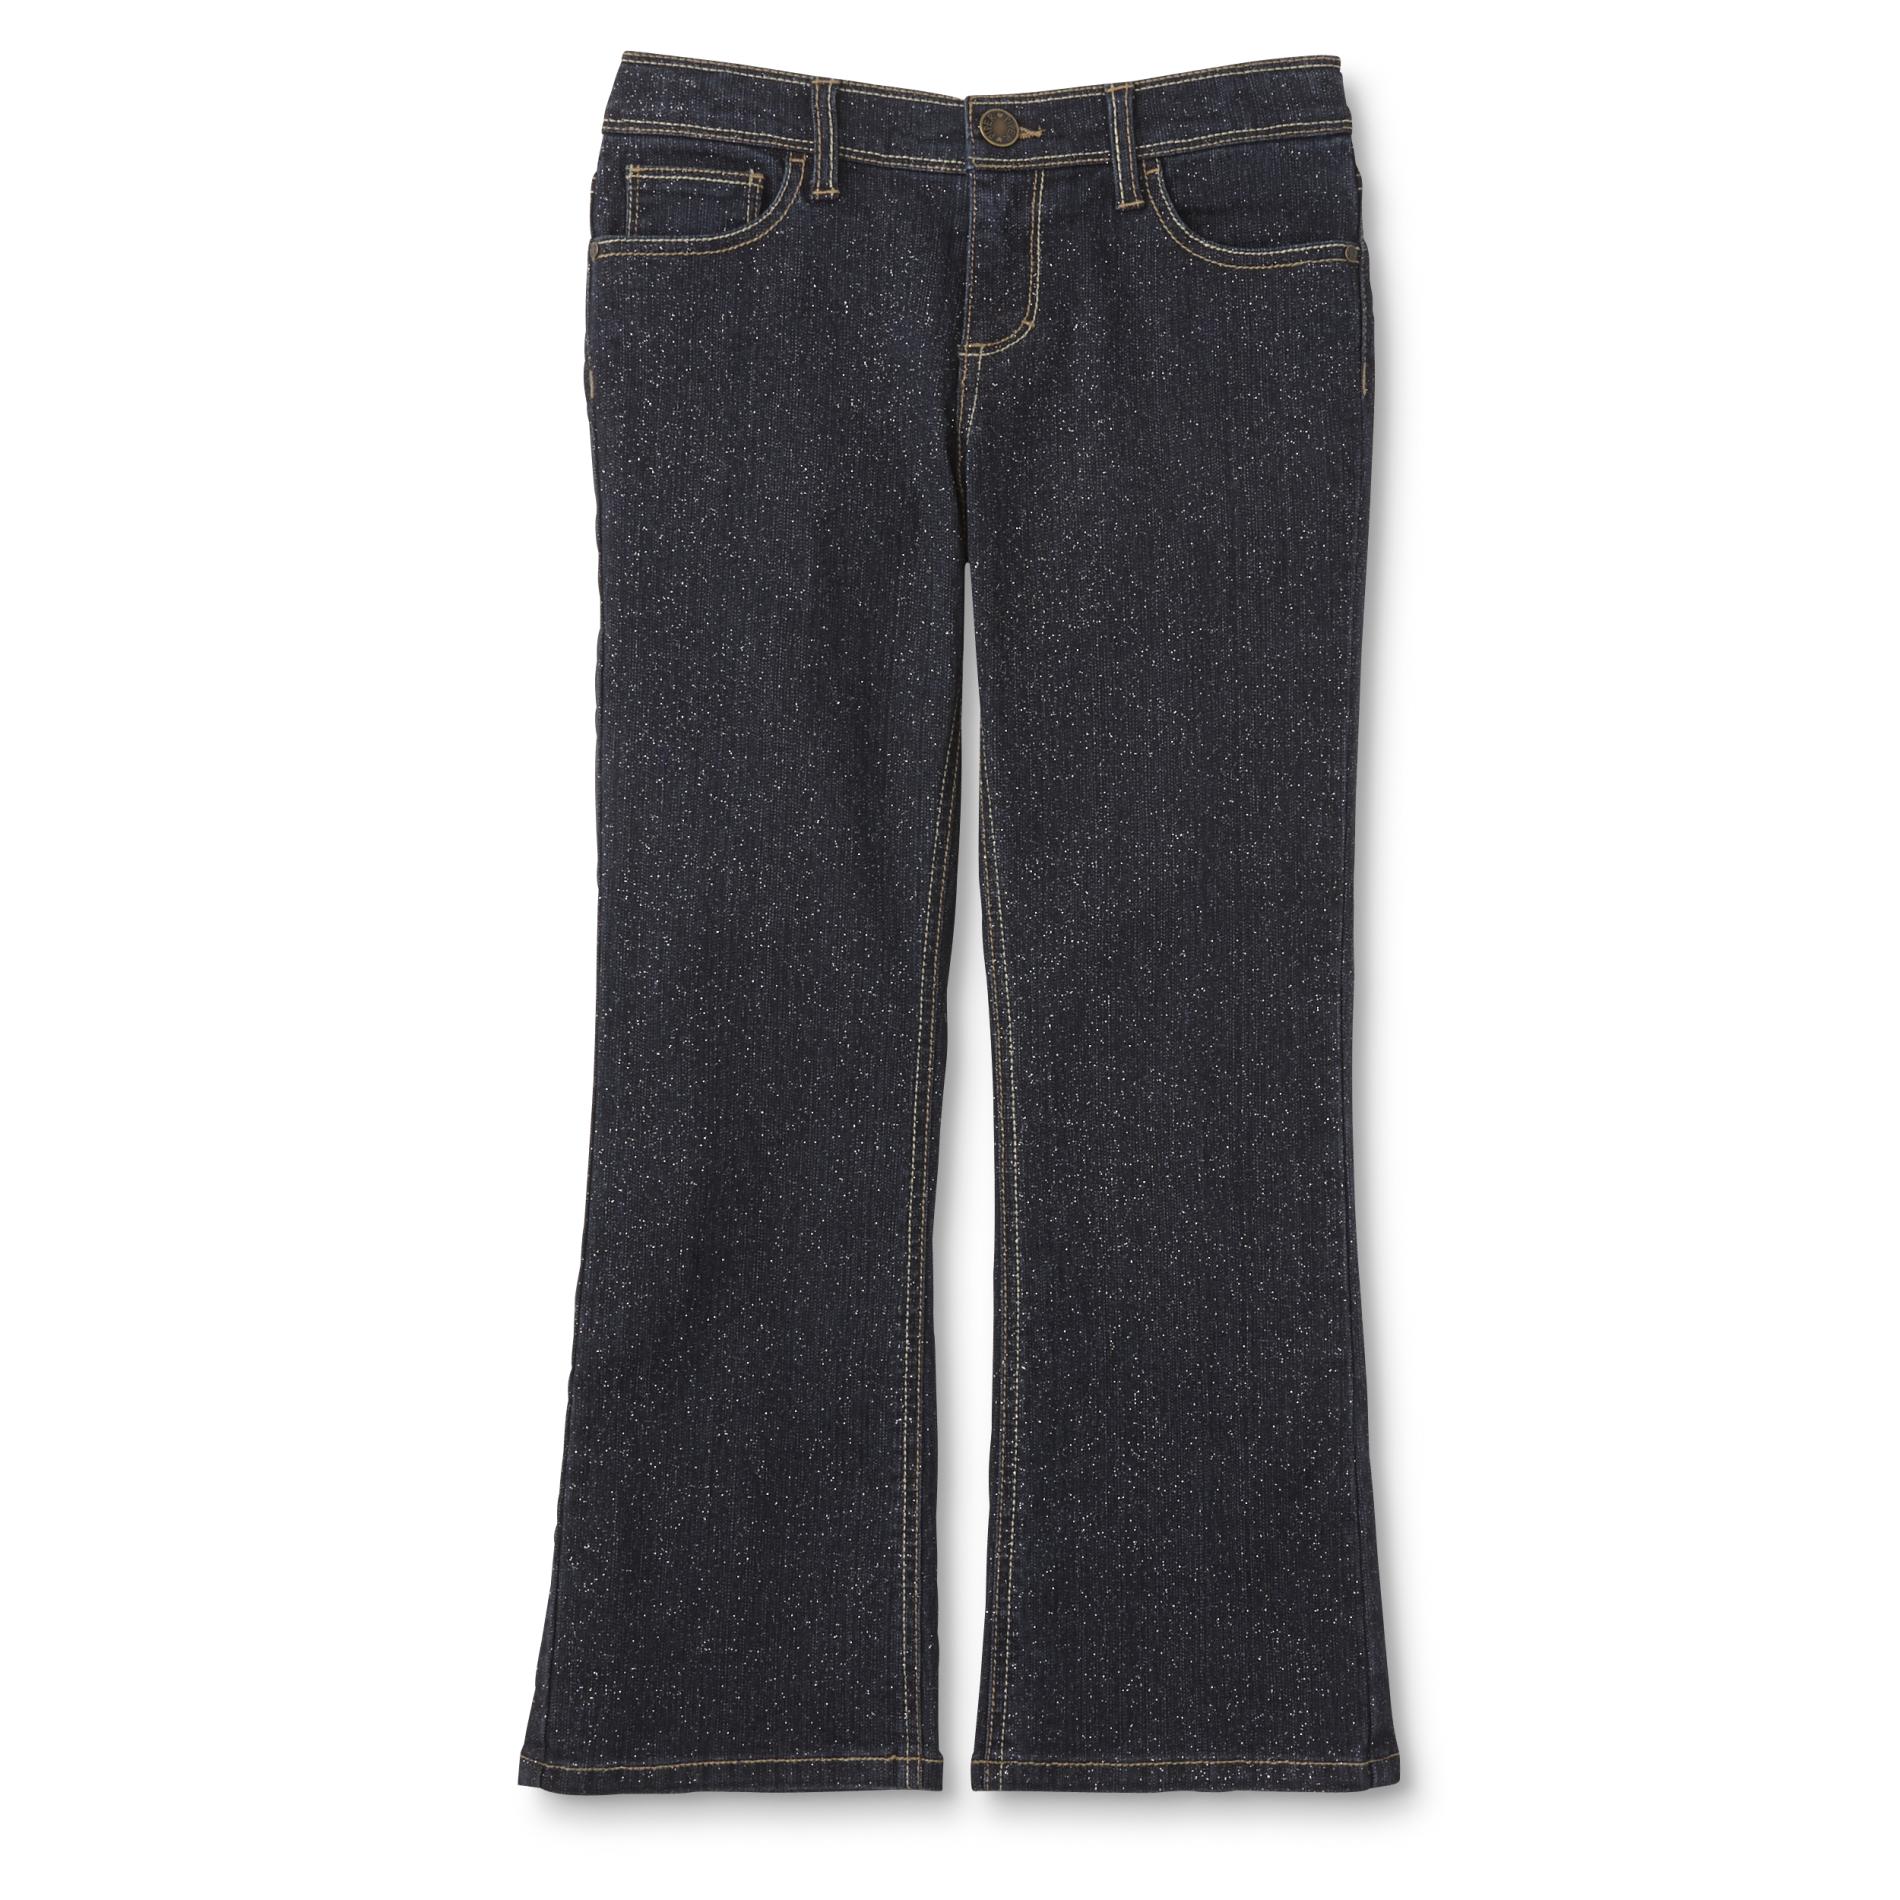 Piper Faves Girls' Bootcut Jeans - Glitter